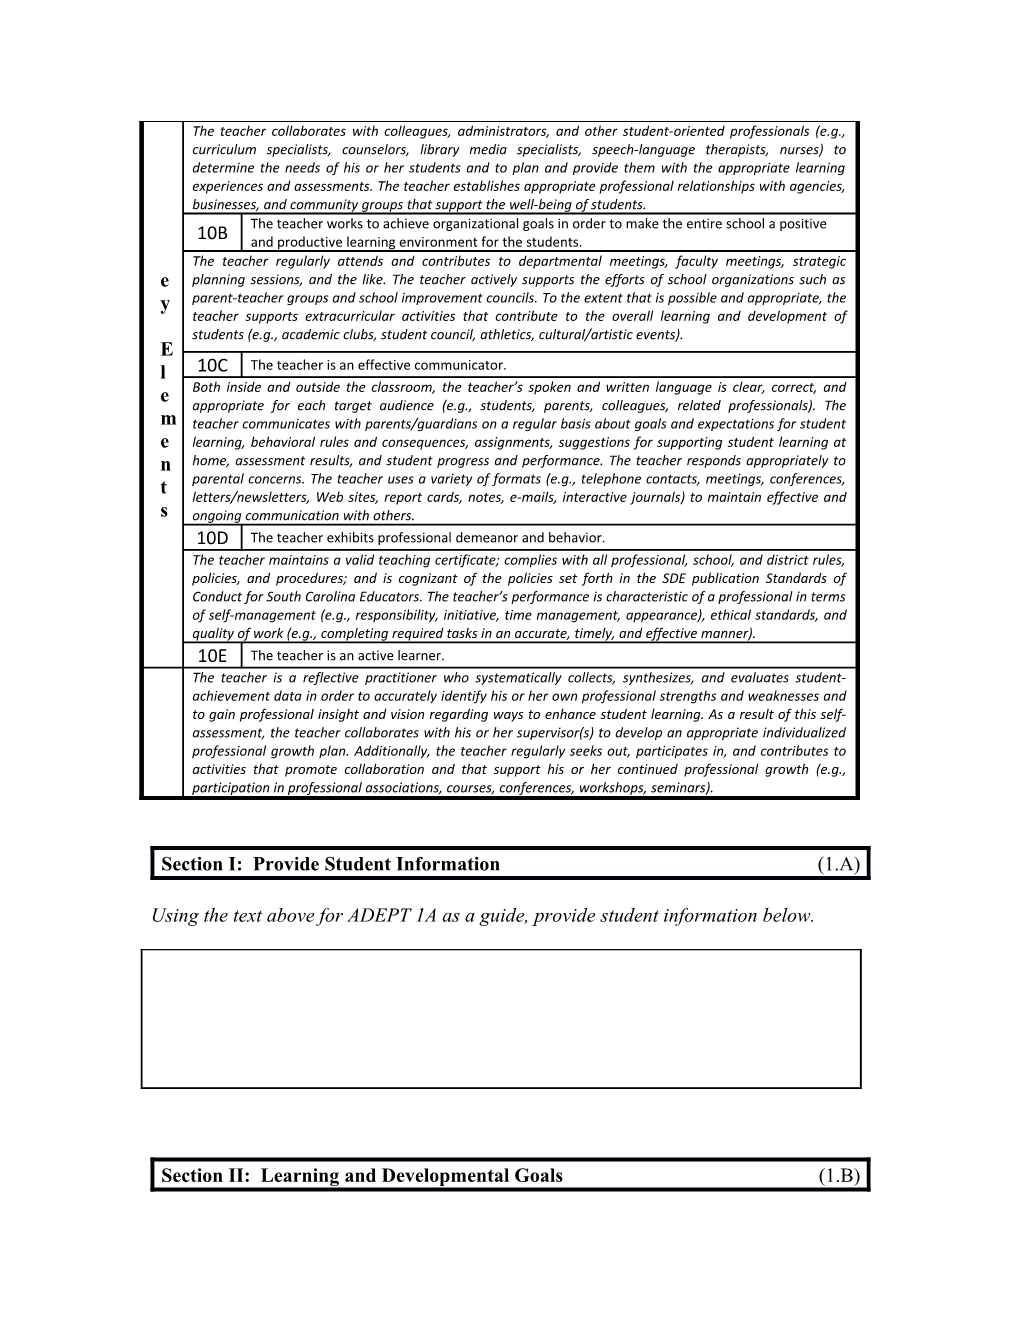 Long-Range Planning (APS 1) & Fulfilling Professional Responsibilities (APS 10)